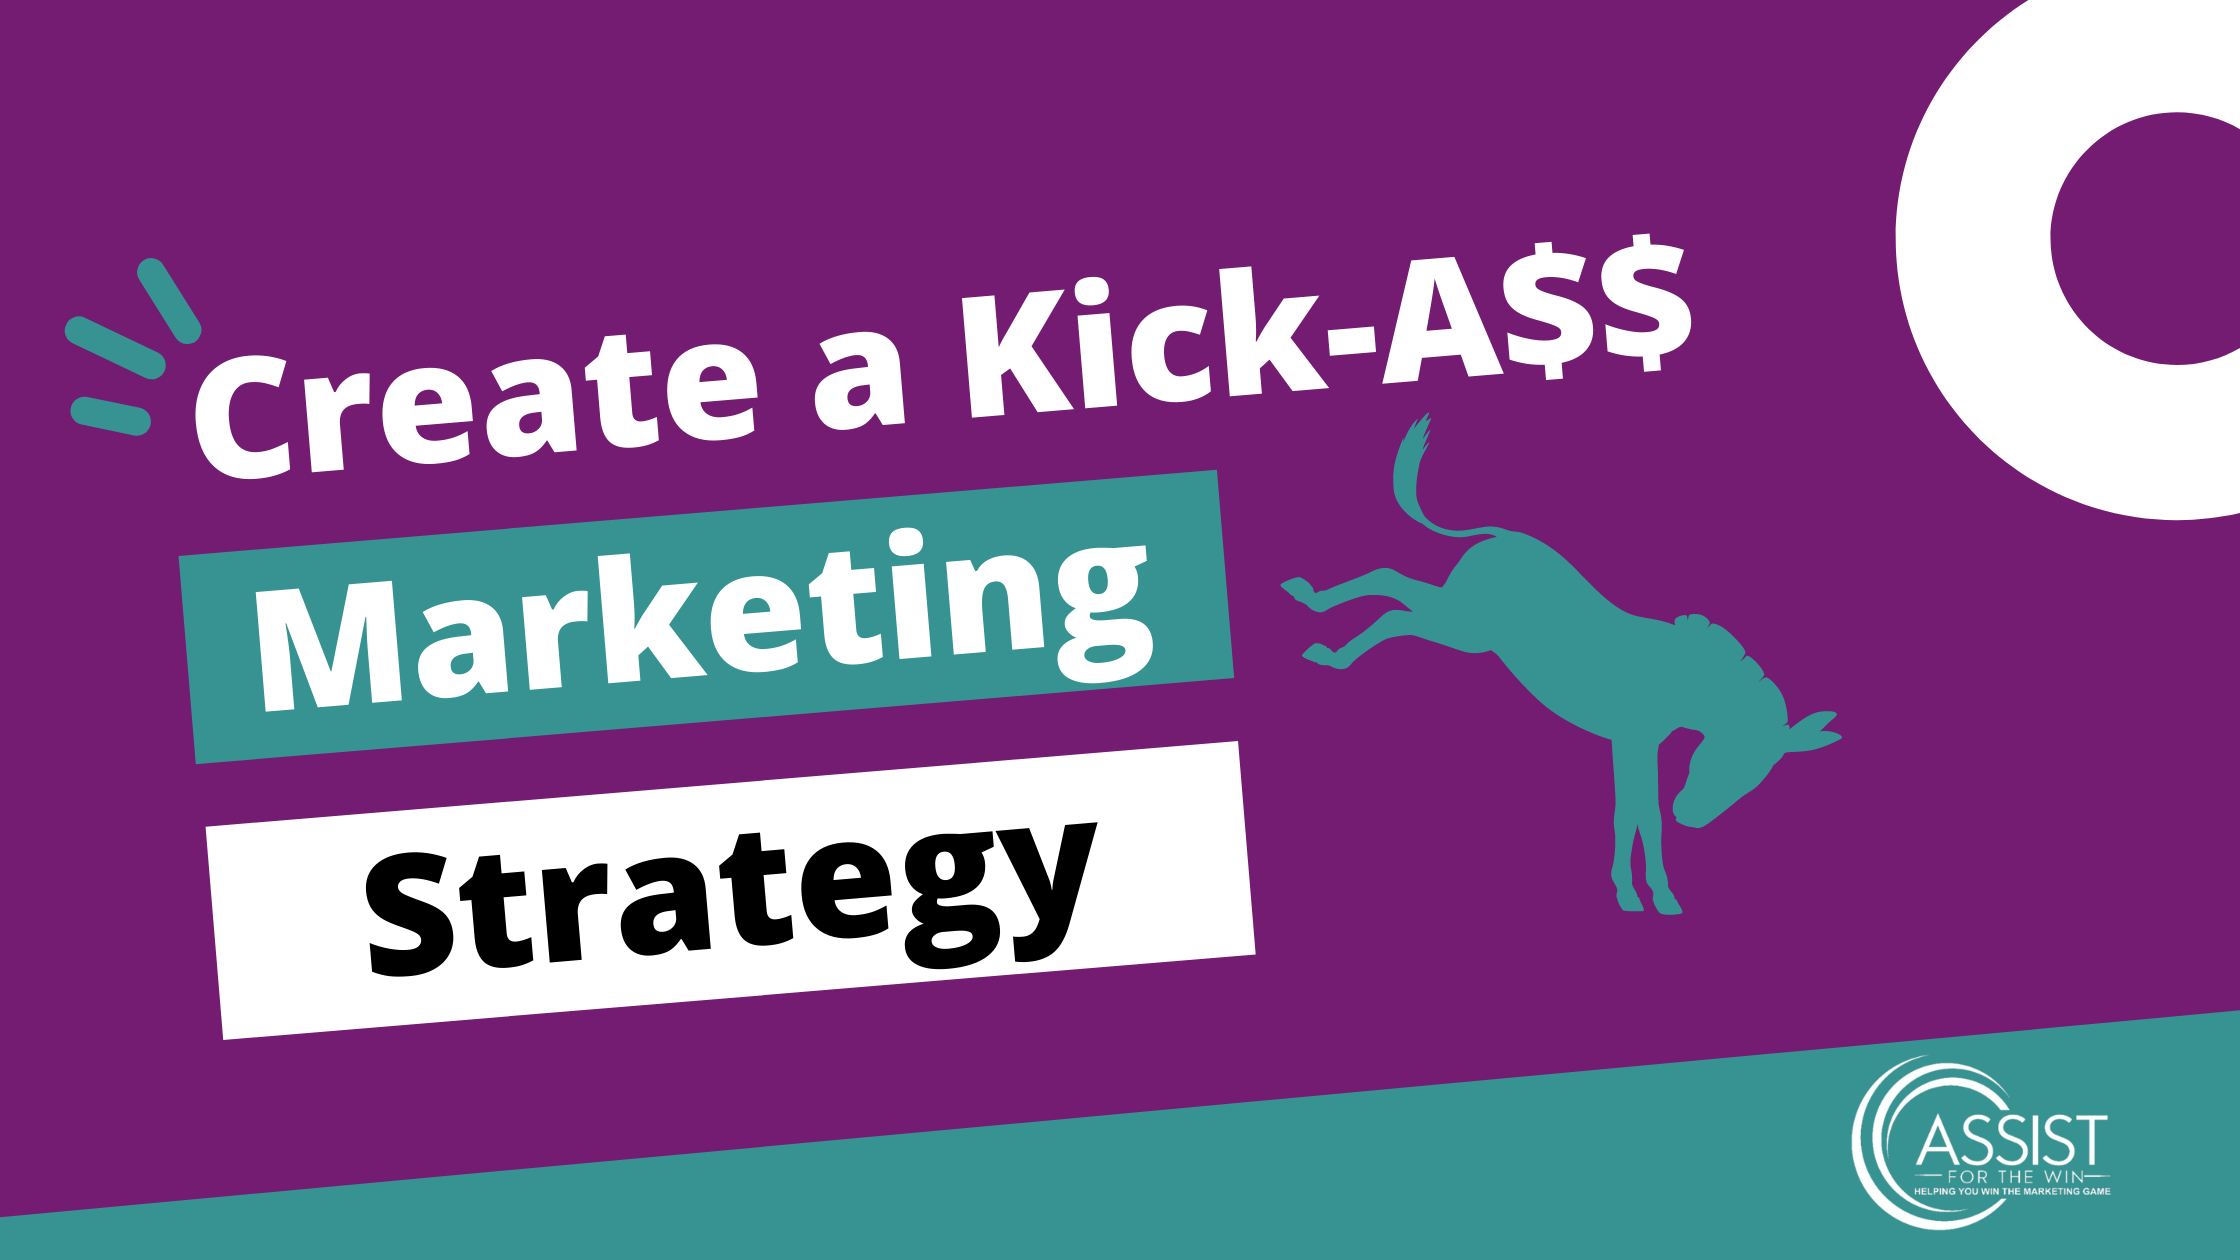 Creating a Kick-A$$ Marketing Strategy